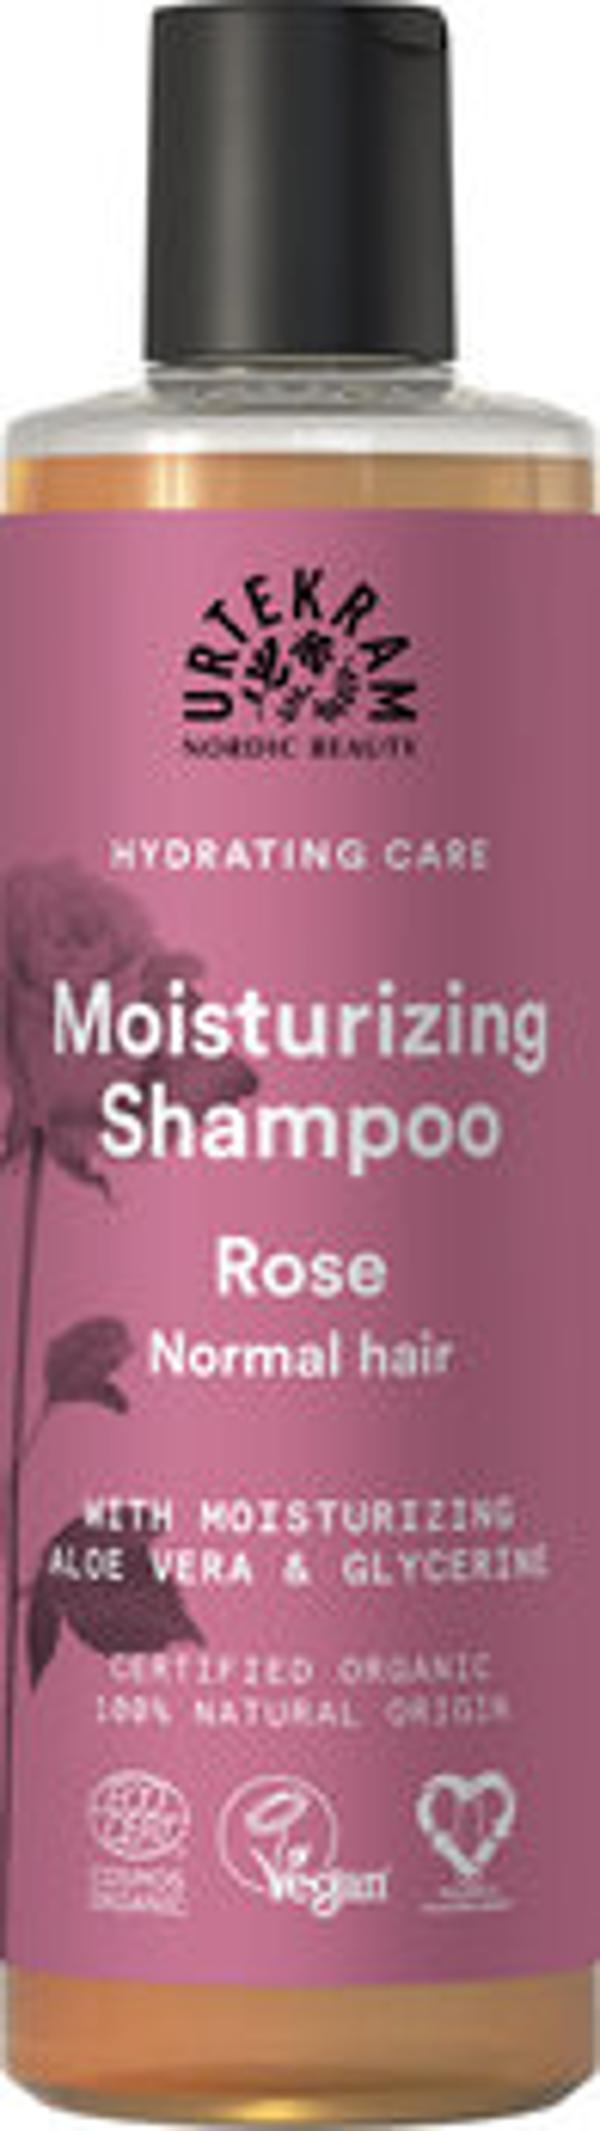 Produktfoto zu Moisturizing Rose Shampoo